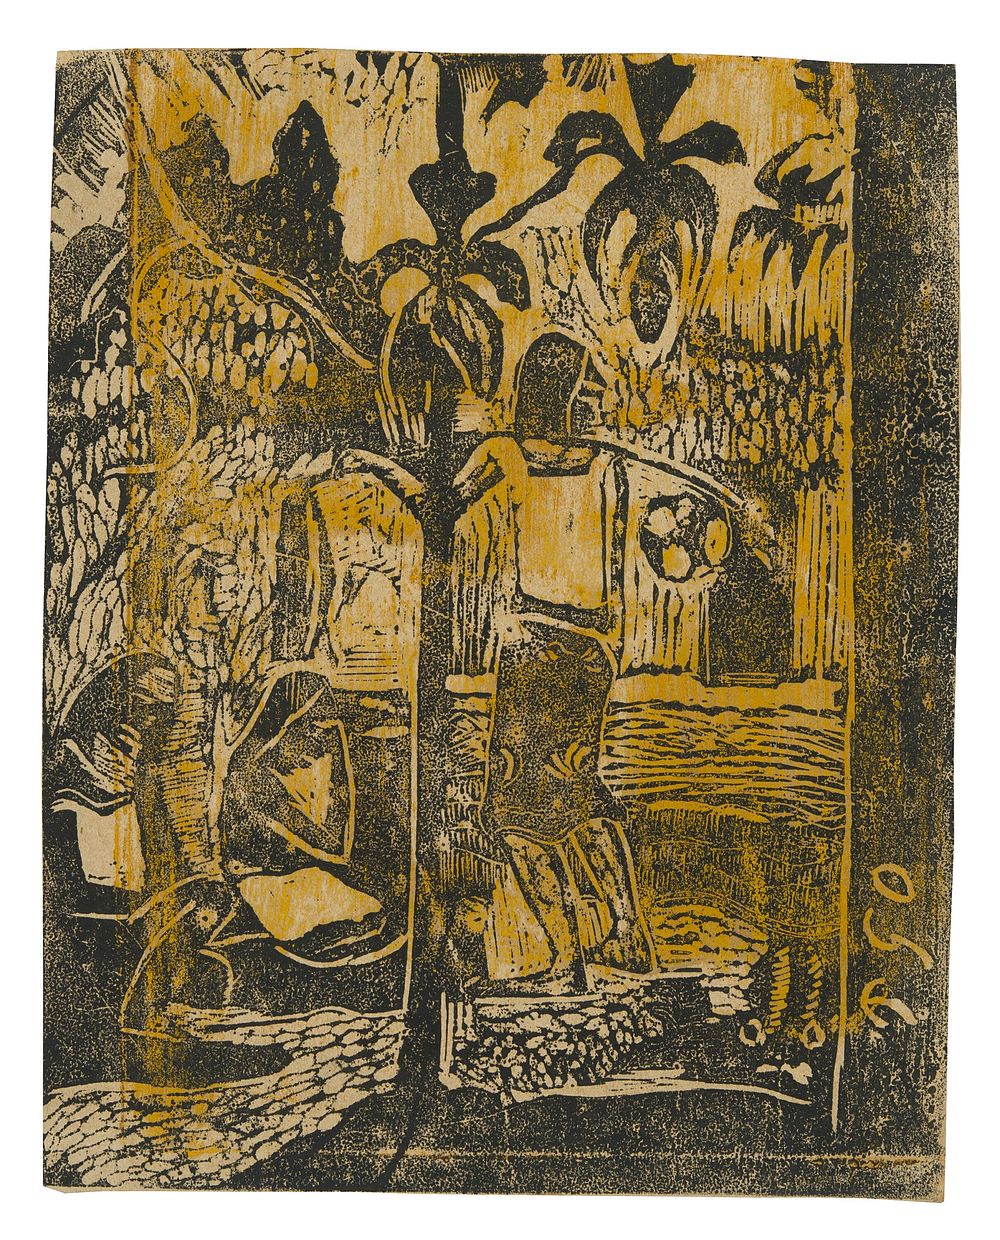 Noa noa (Fragrant) by Paul Gauguin